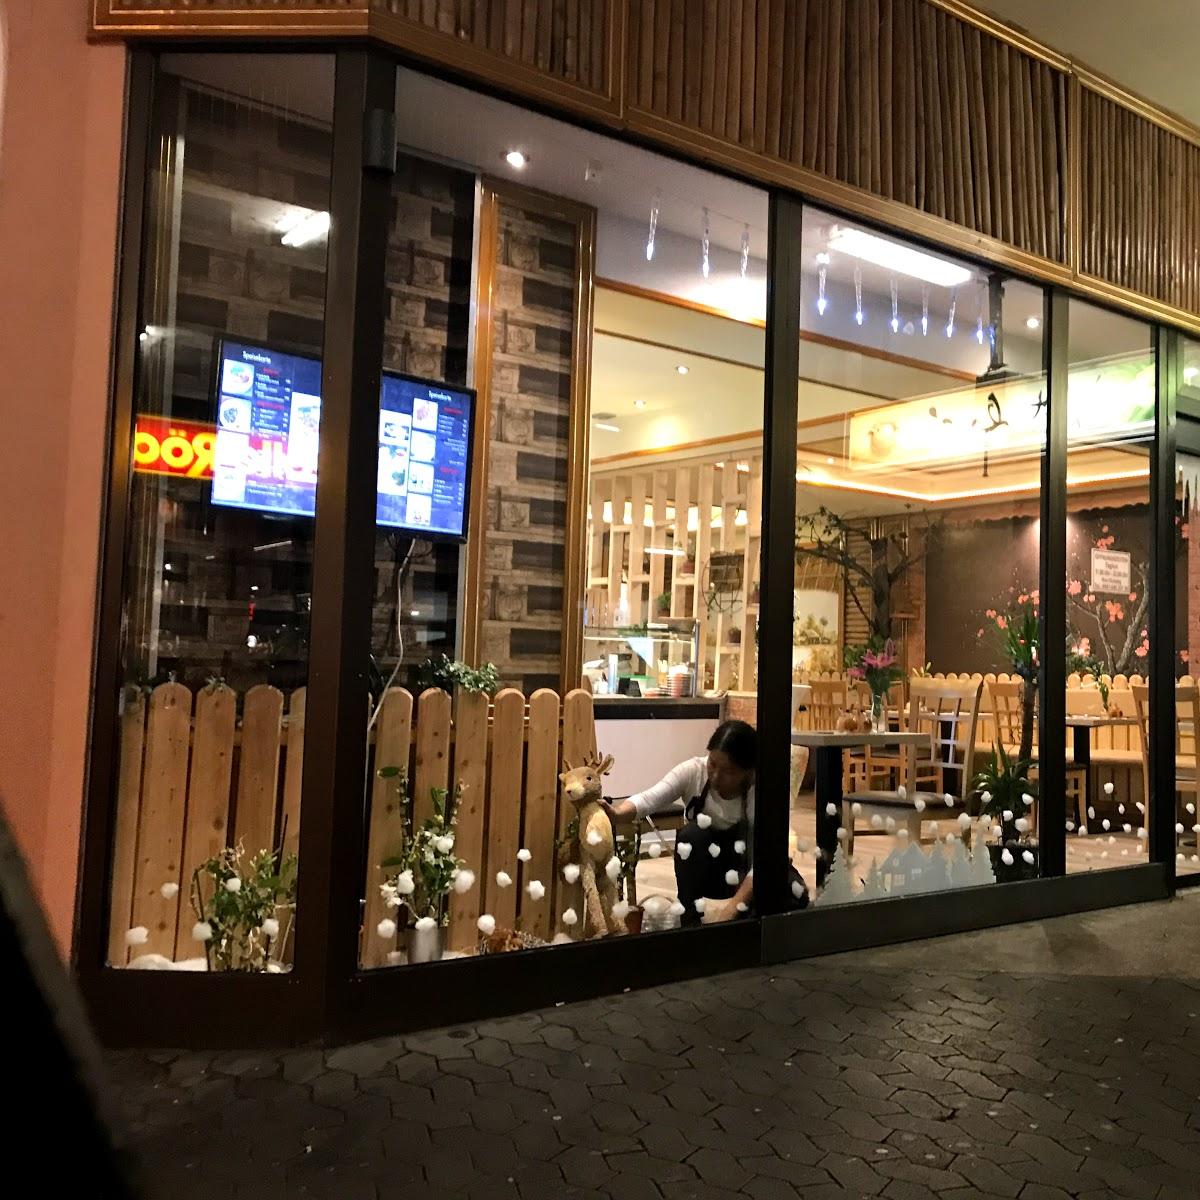 Restaurant "VietQuan" in Saarbrücken